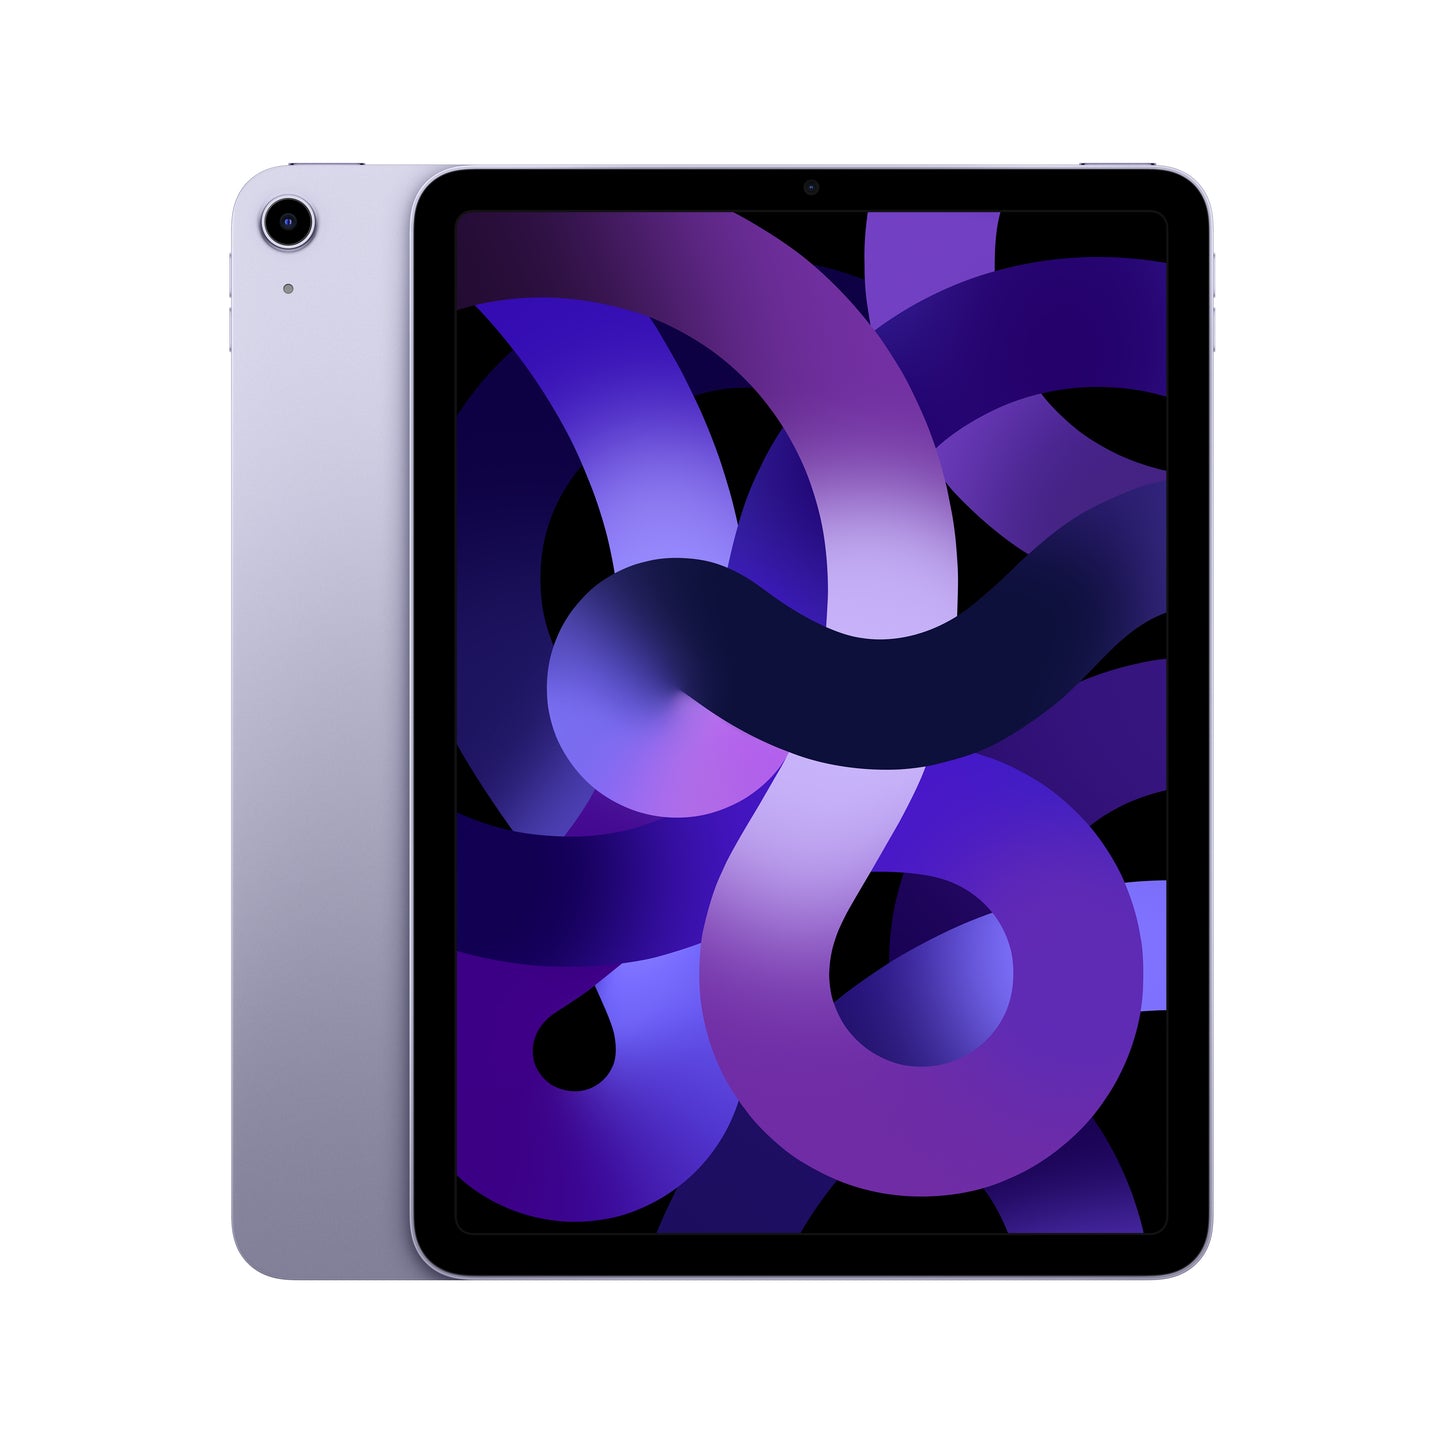 iPad Air with Apple M1